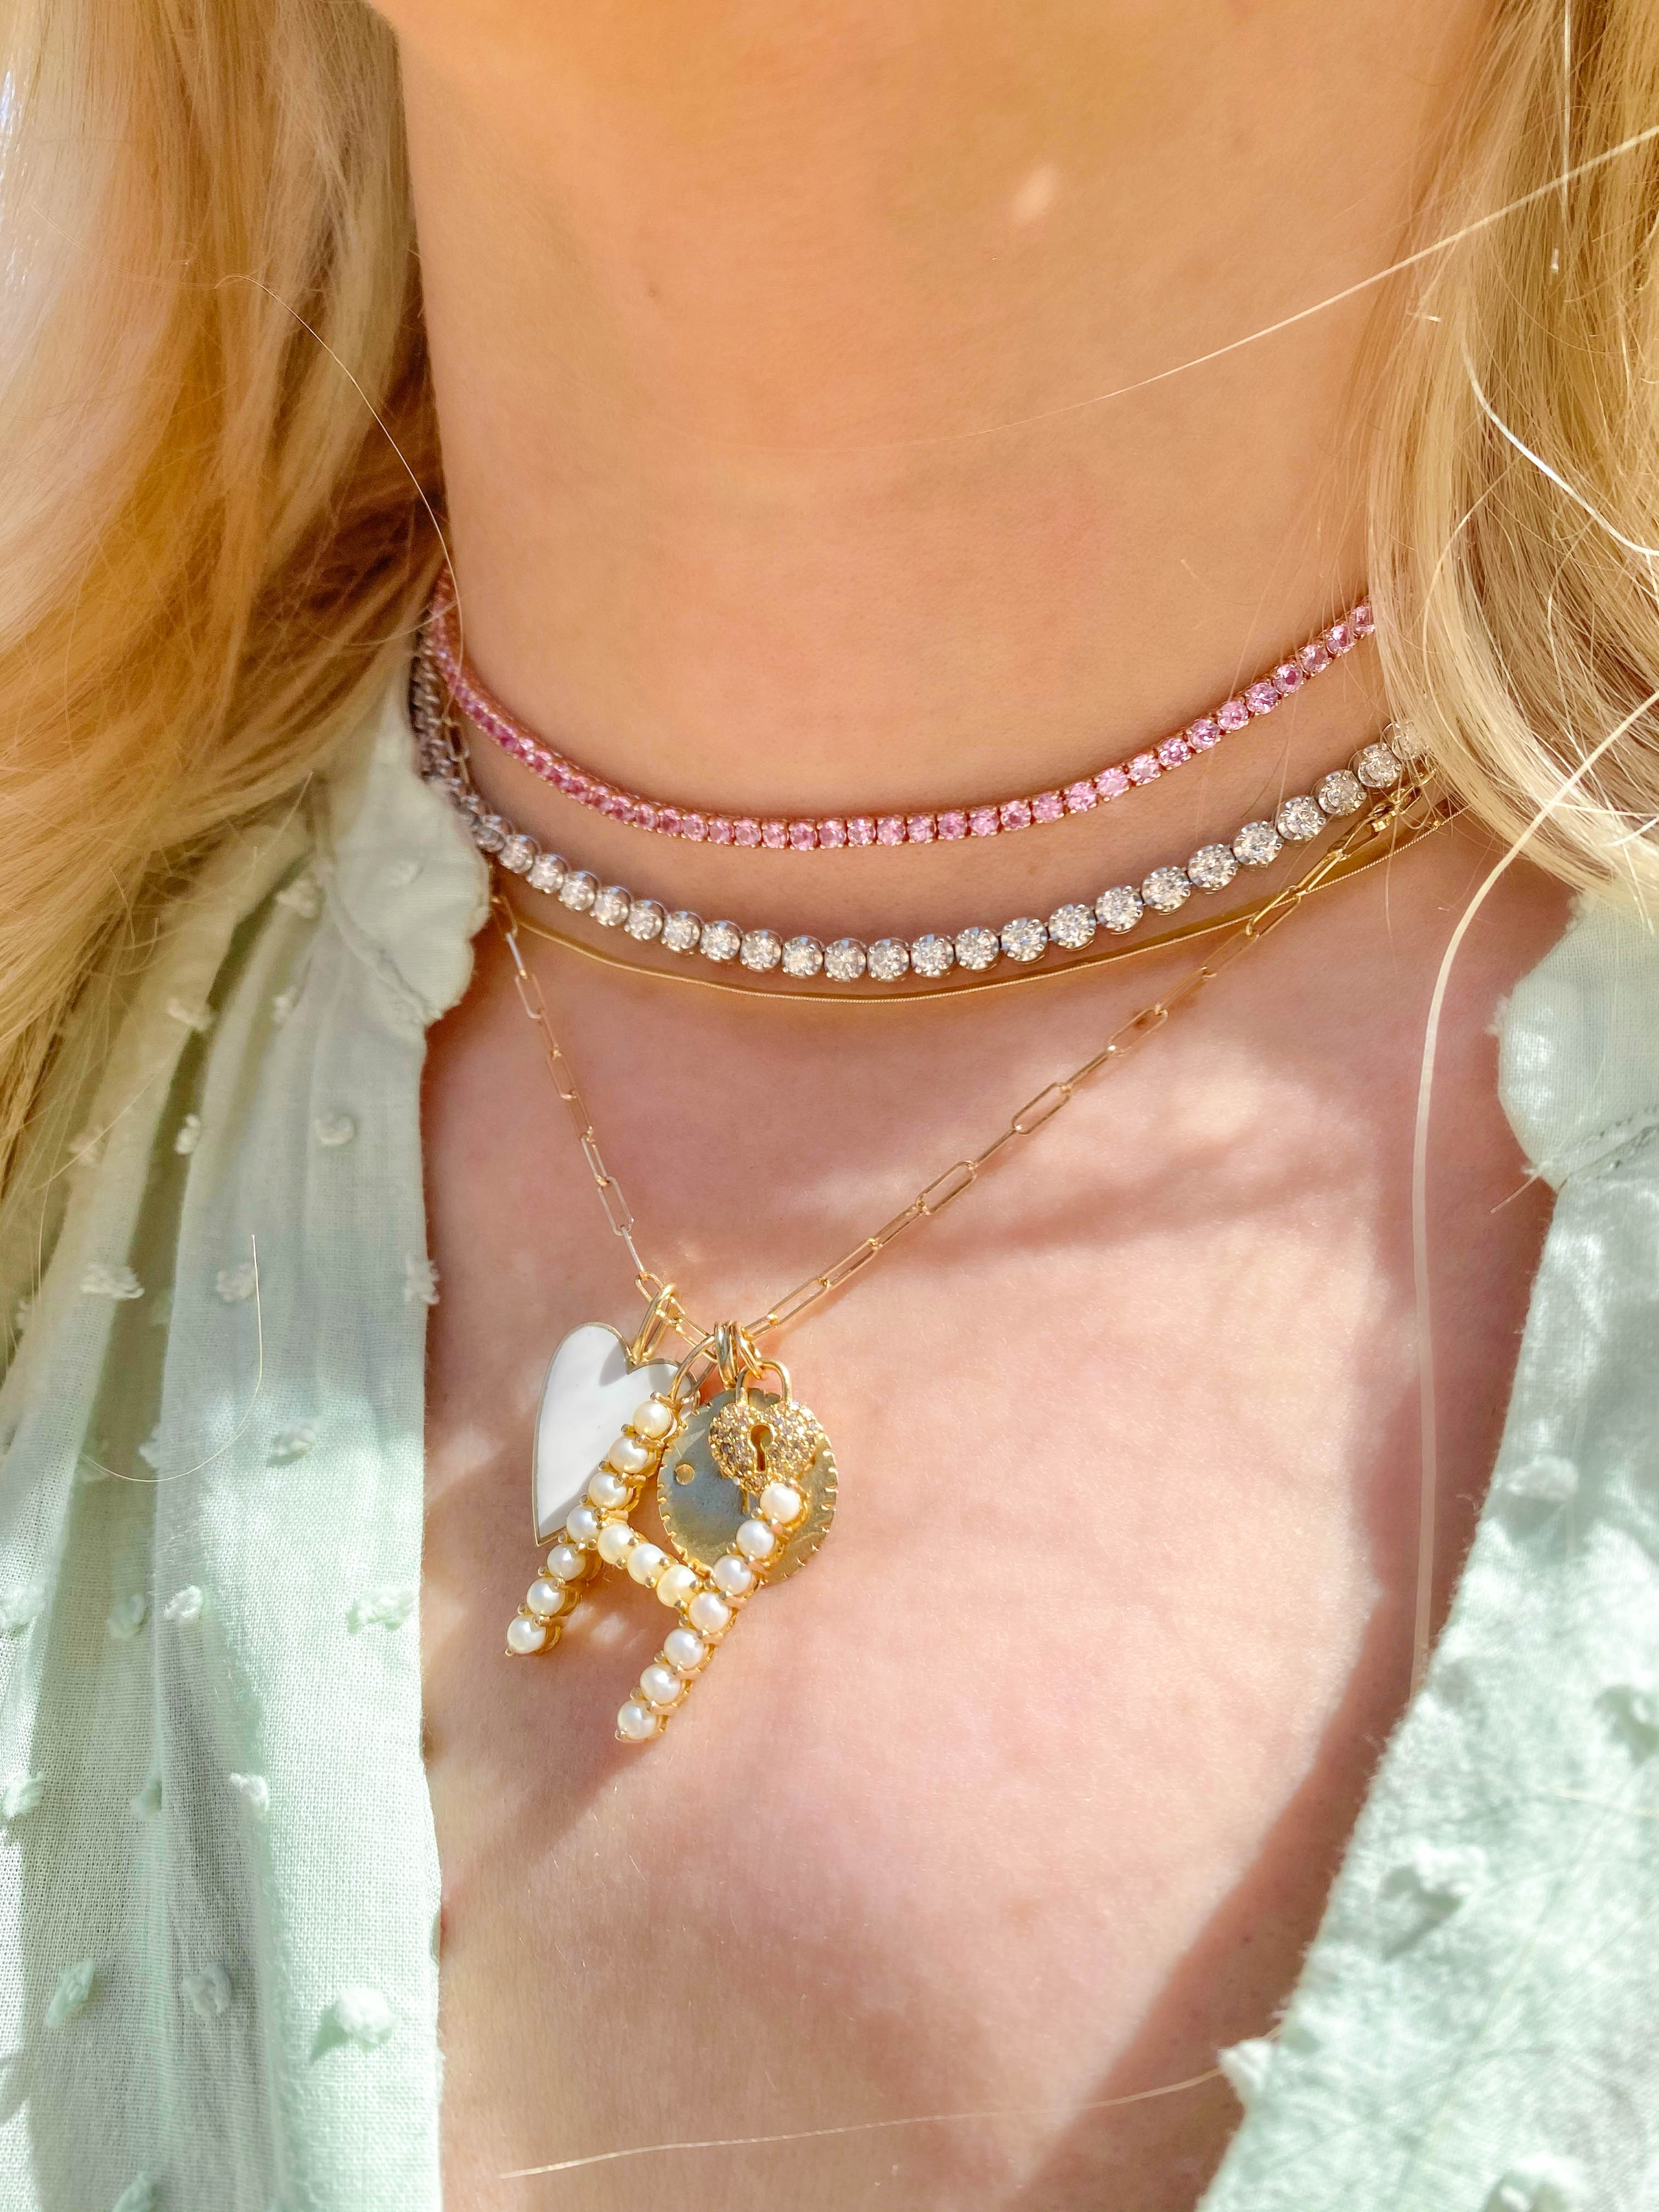 gemstone tennis necklace/choker